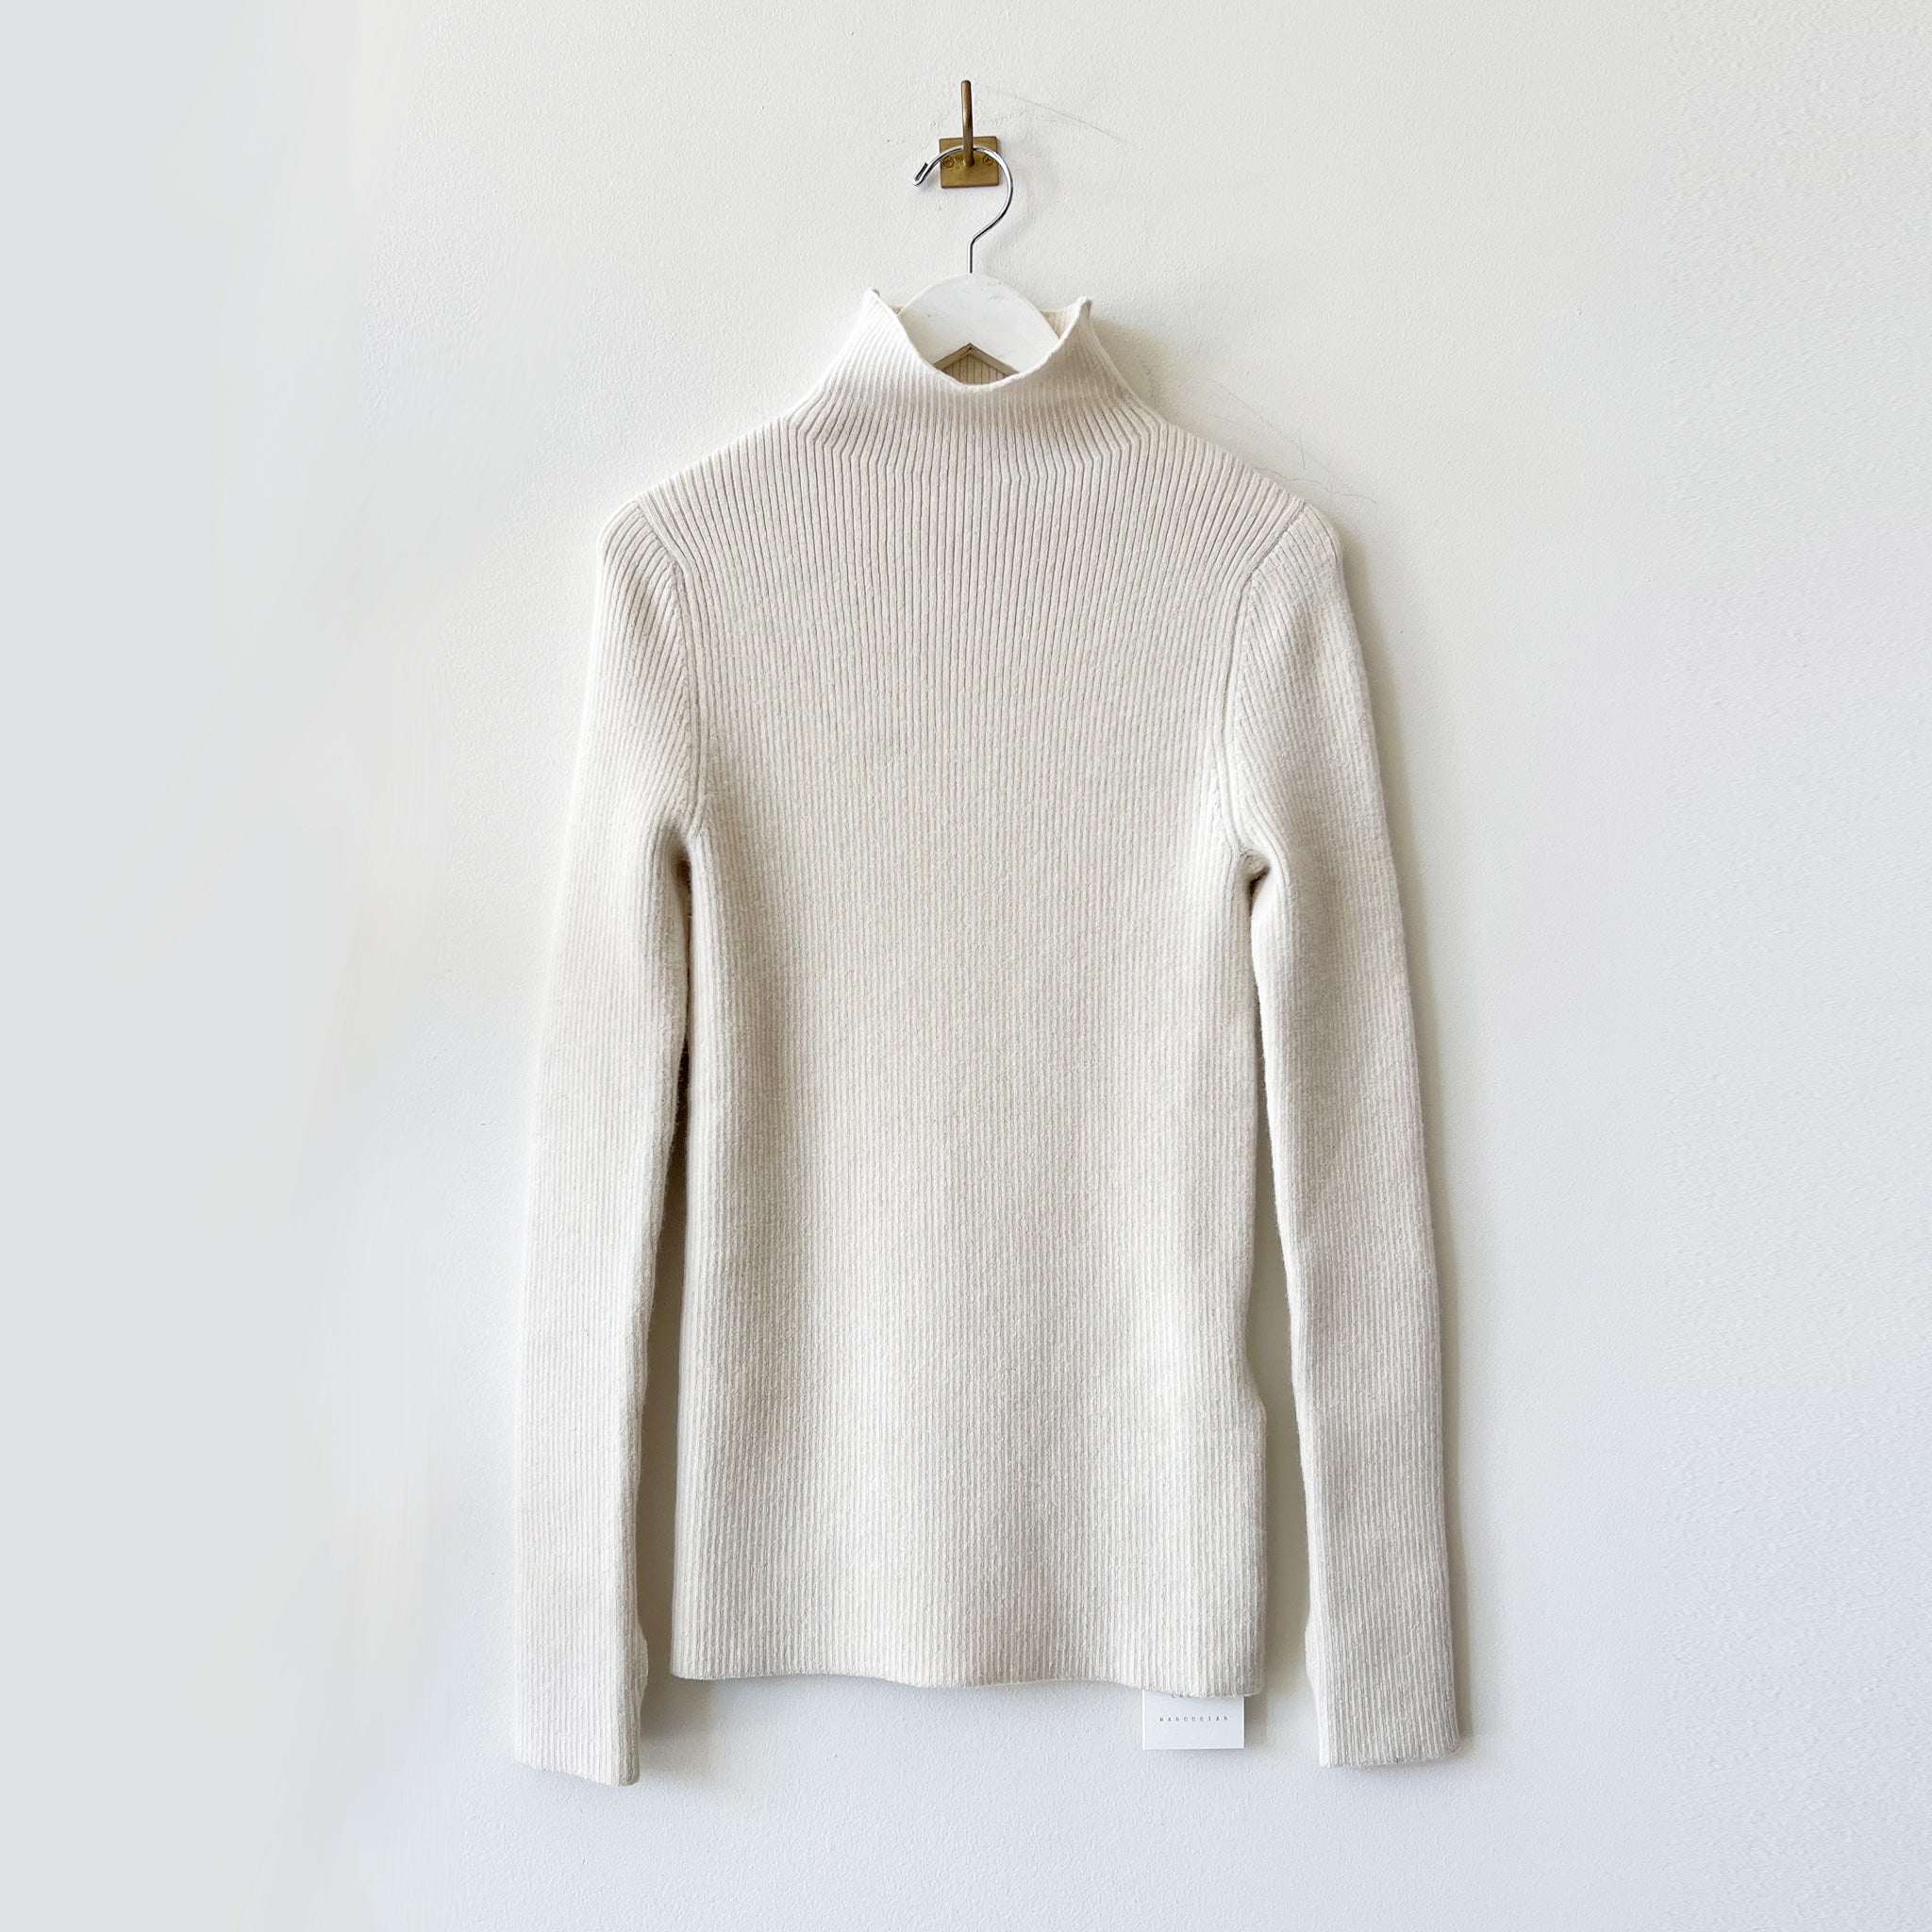 Ribbed white long sleeved mockneck sweater.